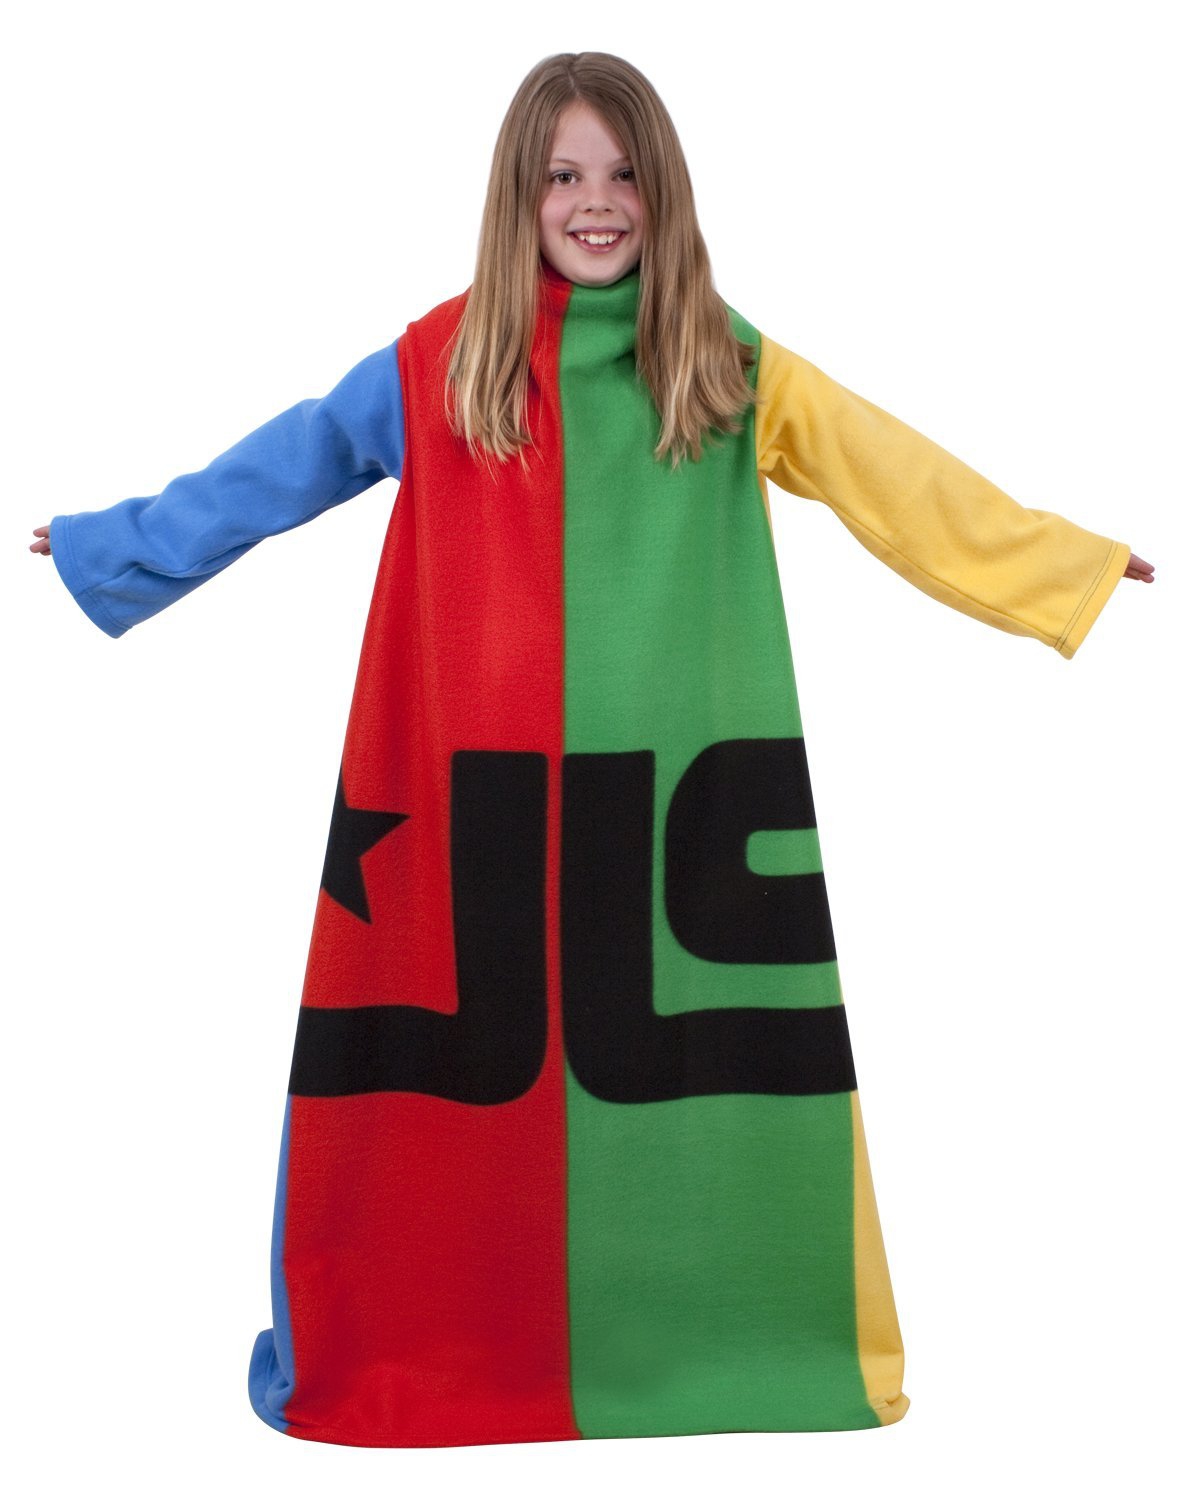 Jls 'Jukebox' Cosy Wrap Blanket Sleeved Fleece